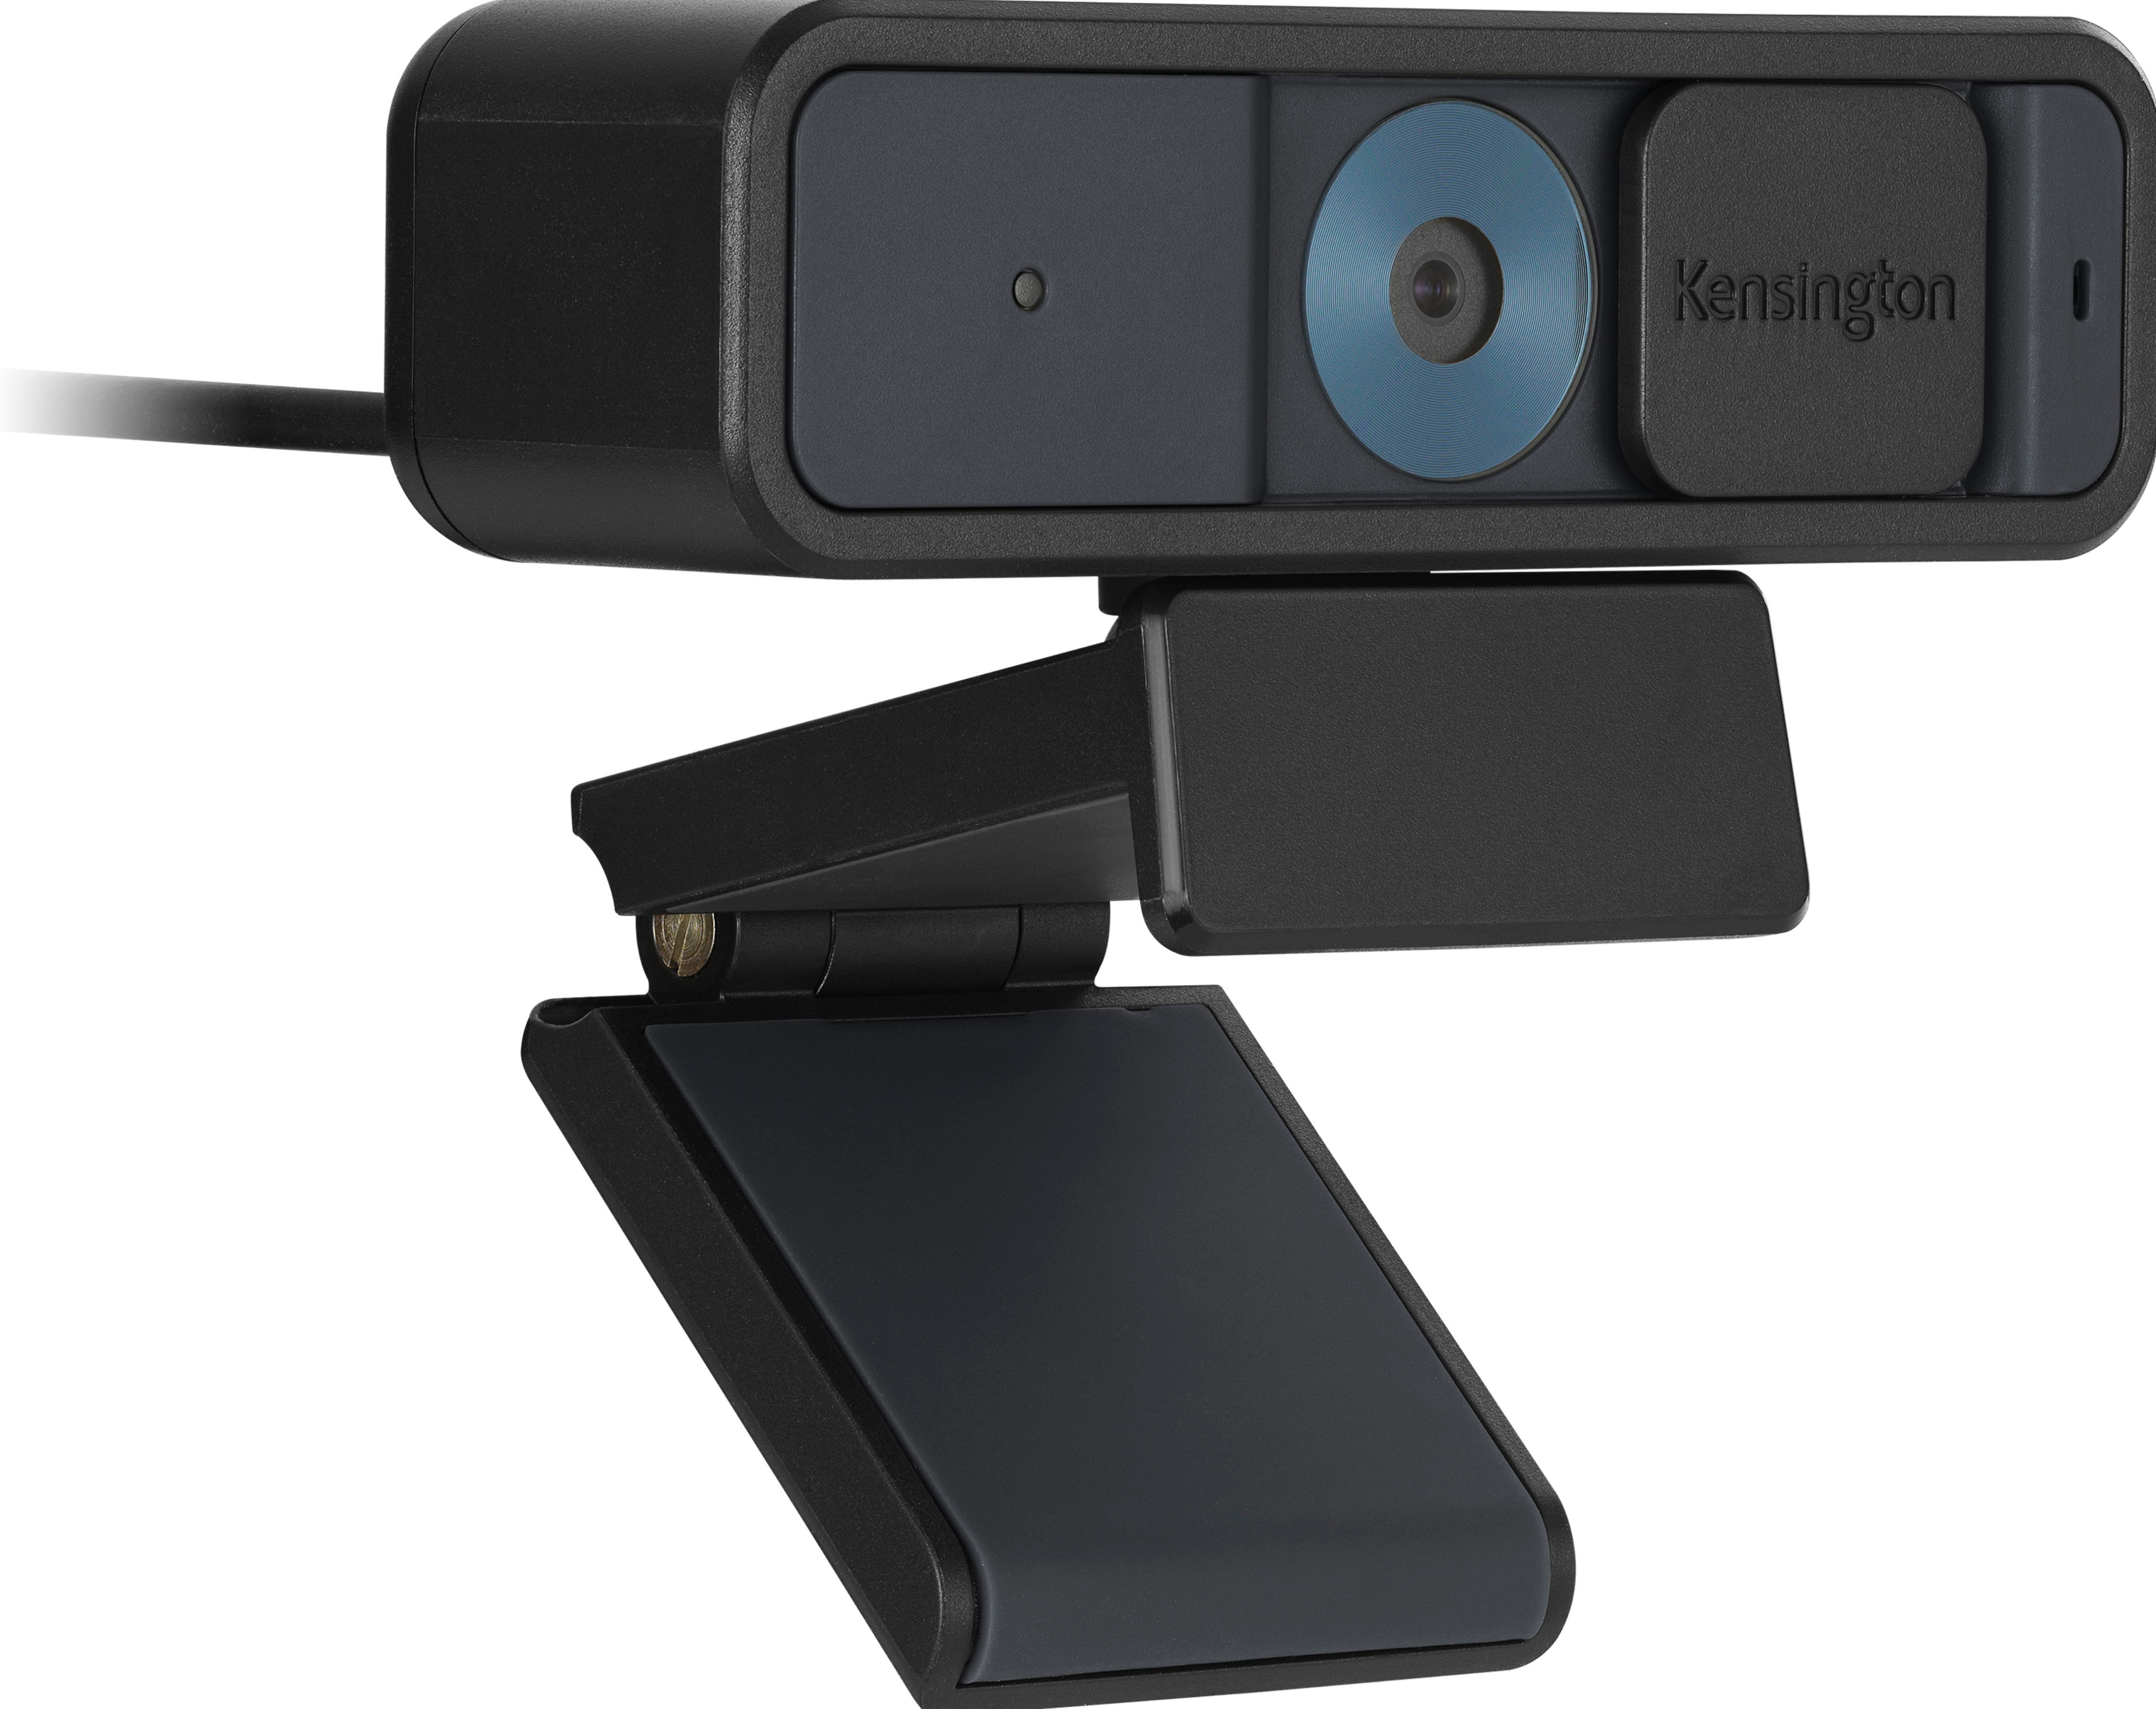 KENSINGTON 1080p Auto Focus Webcam 75° K81175WW 1 Omindirectional Mic. blk 1 Omindirectional Mic. bl